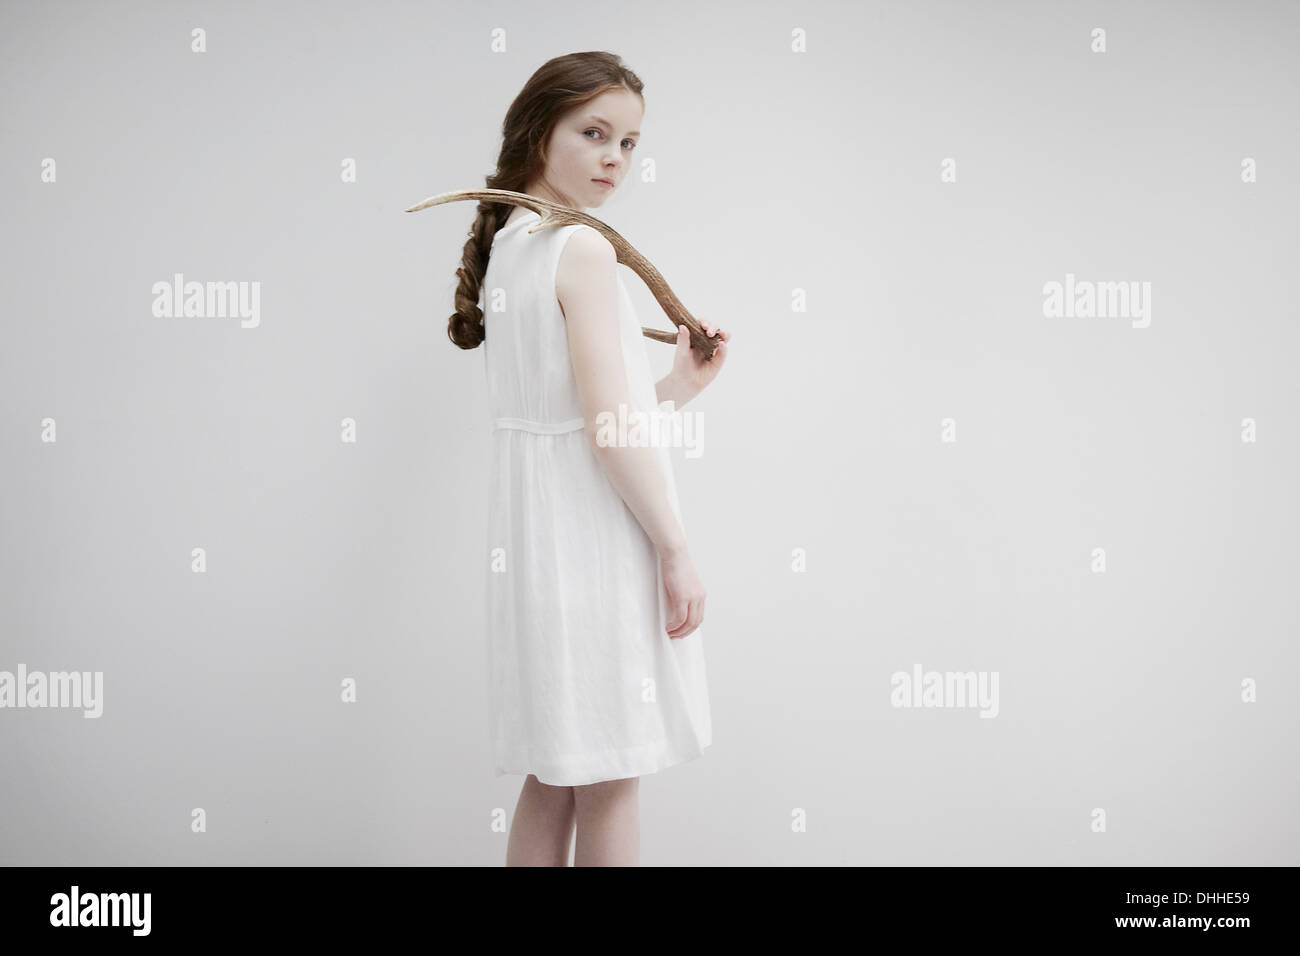 Girl posing sideways with antlers Stock Photo